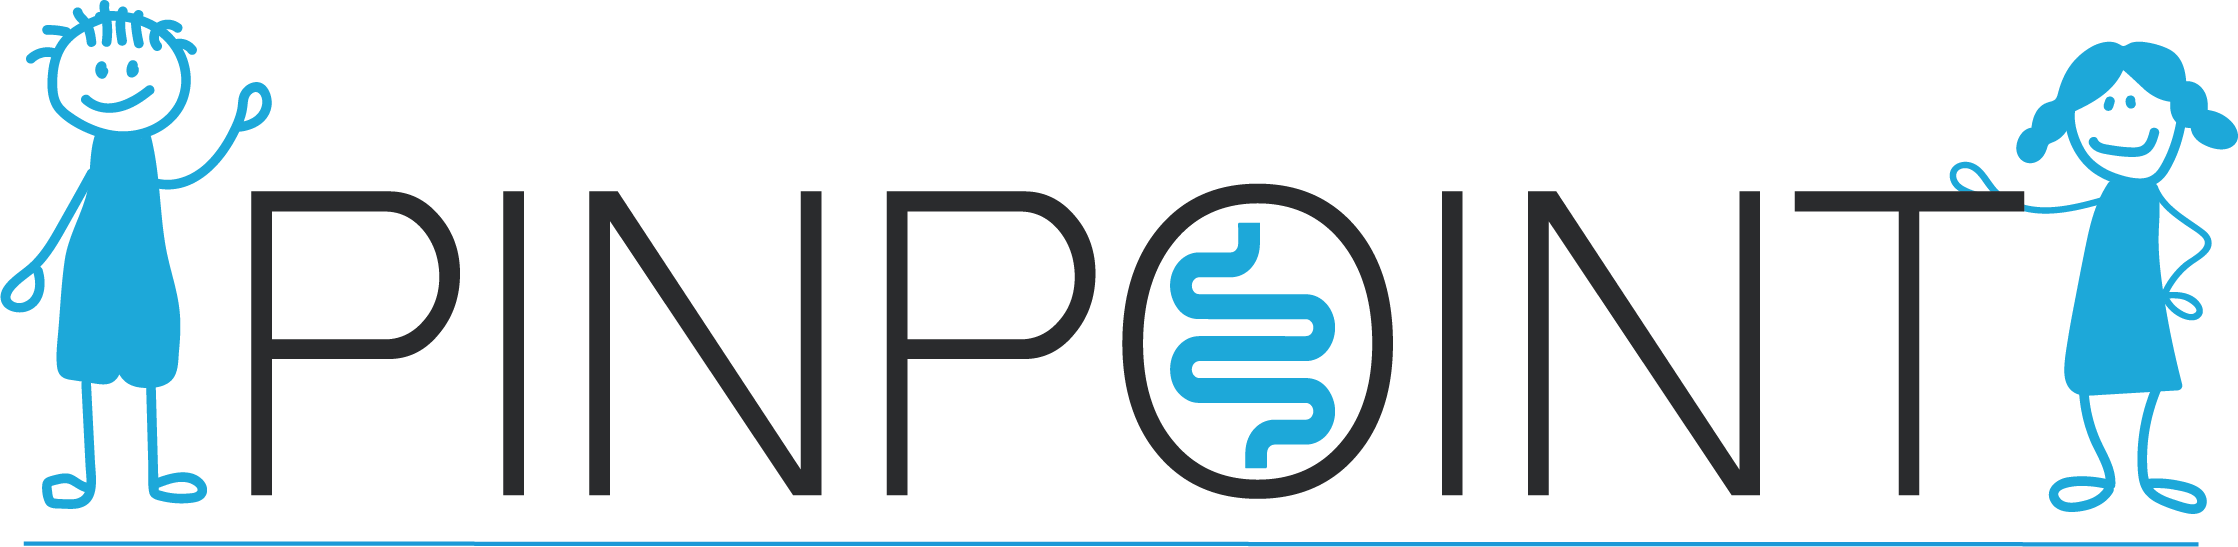 PINPOINT logo